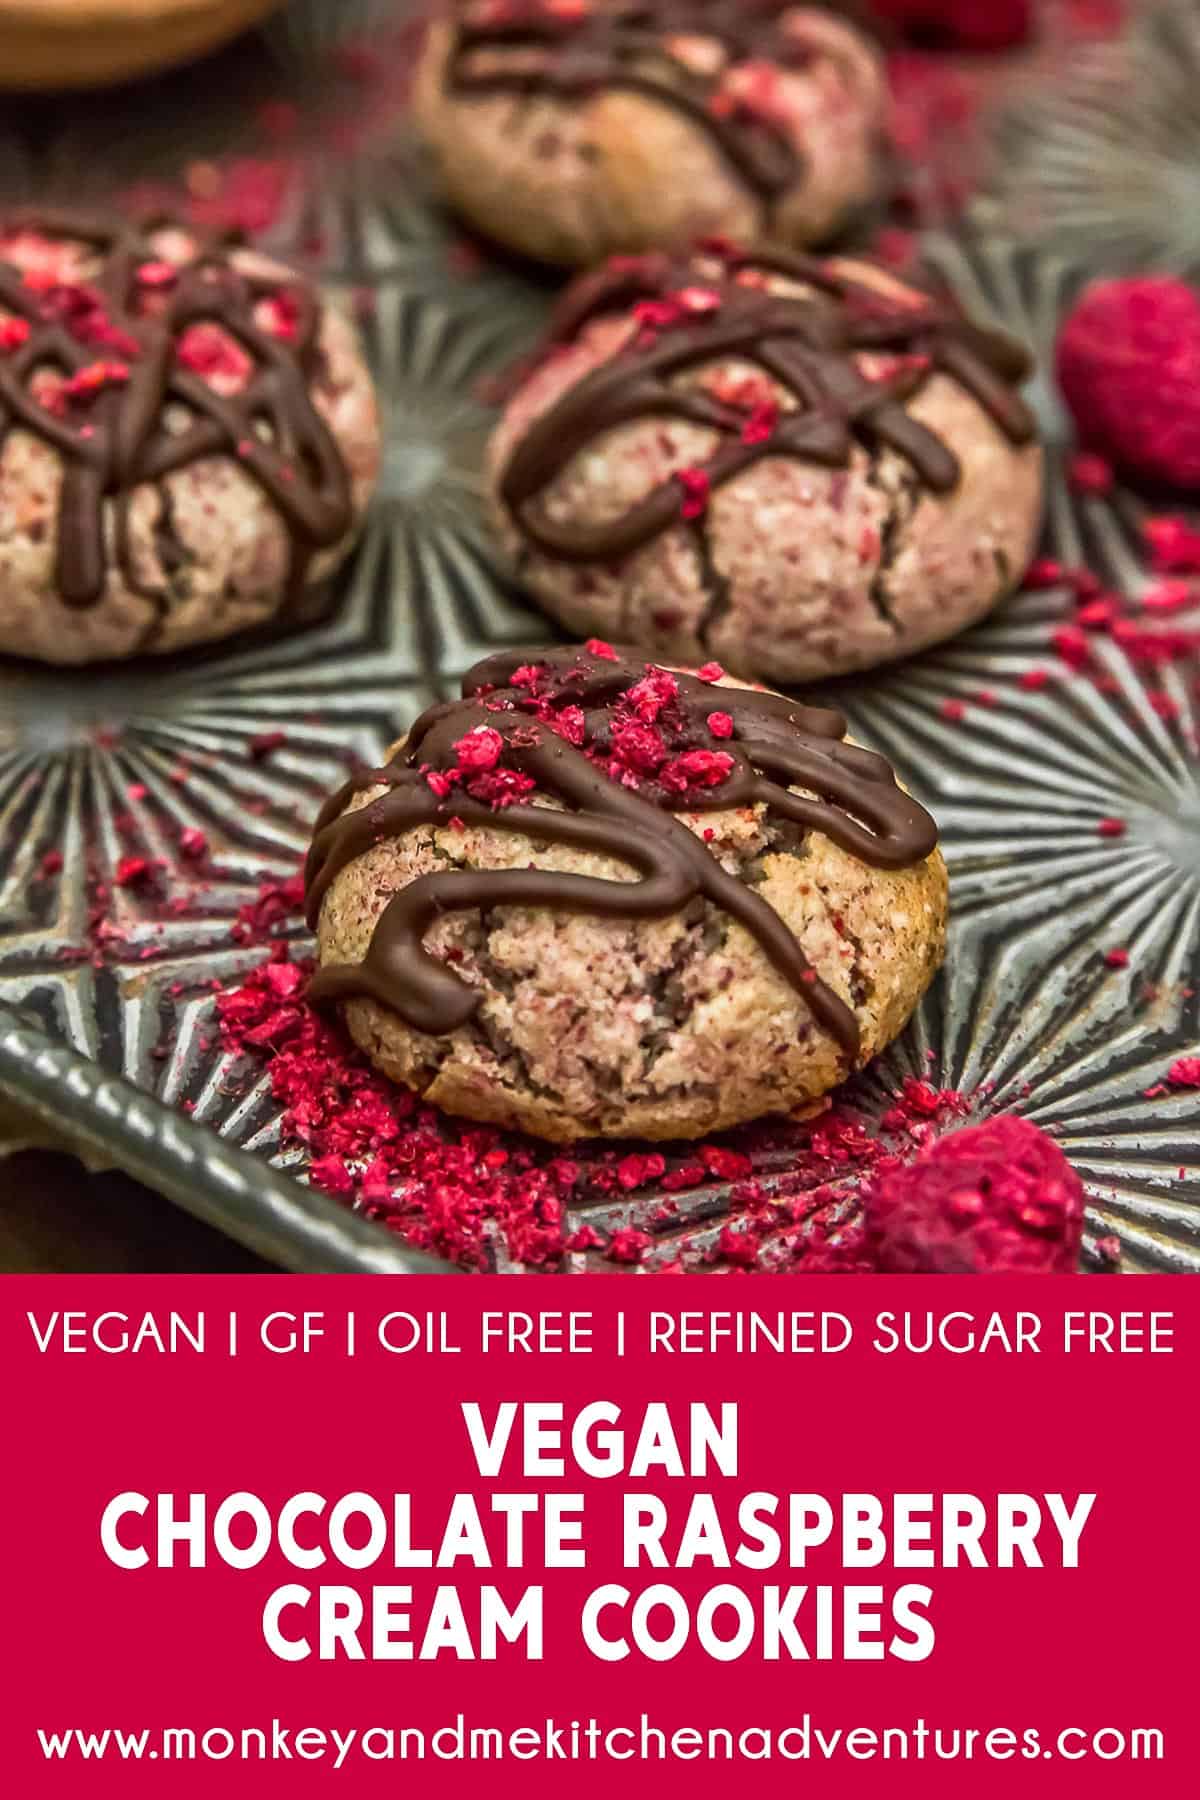 Vegan Chocolate Raspberry Cream Cookies with Text Description